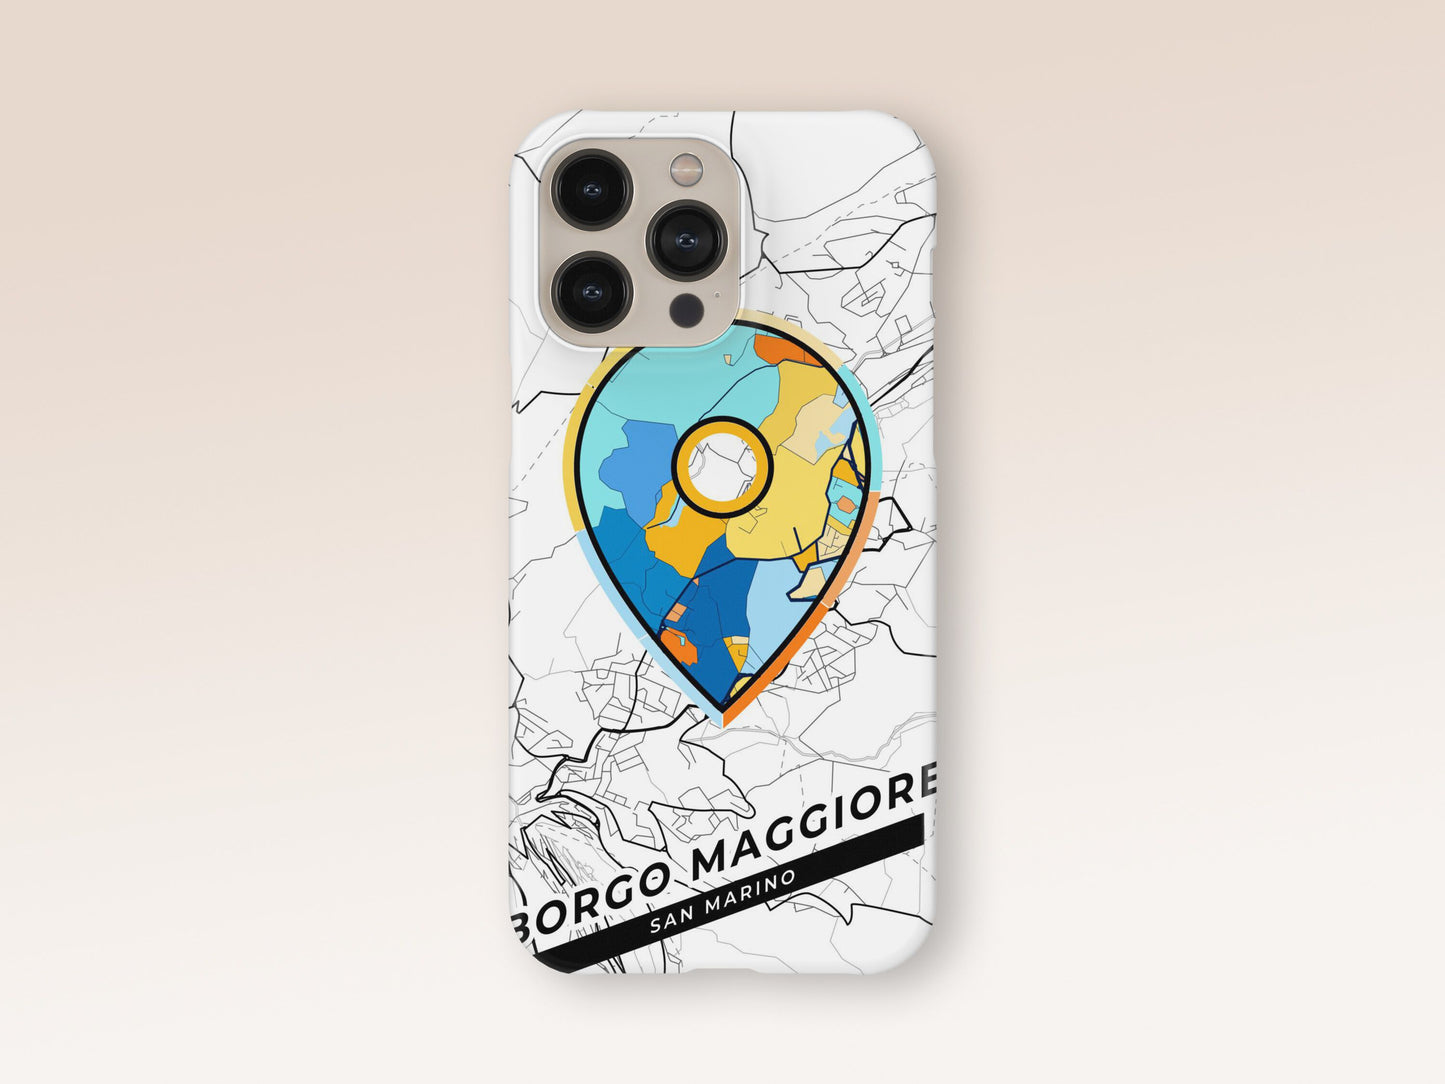 Borgo Maggiore San Marino slim phone case with colorful icon. Birthday, wedding or housewarming gift. Couple match cases. 1